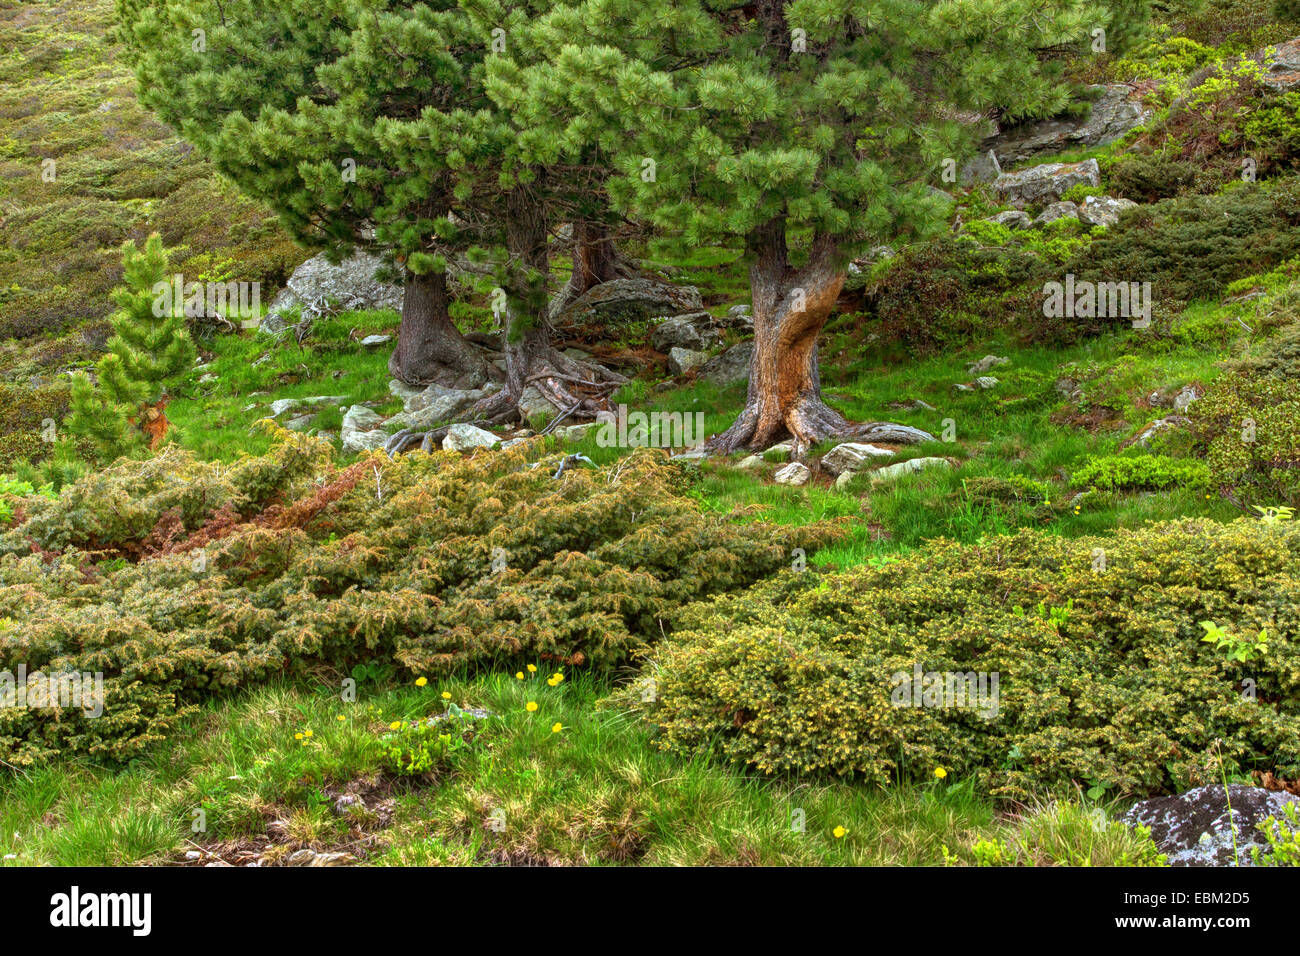 Swiss stone pine, arolla pine (Pinus cembra), junipers and swiss stone pines, Austria, Kaernten, Nockberge National Park Stock Photo